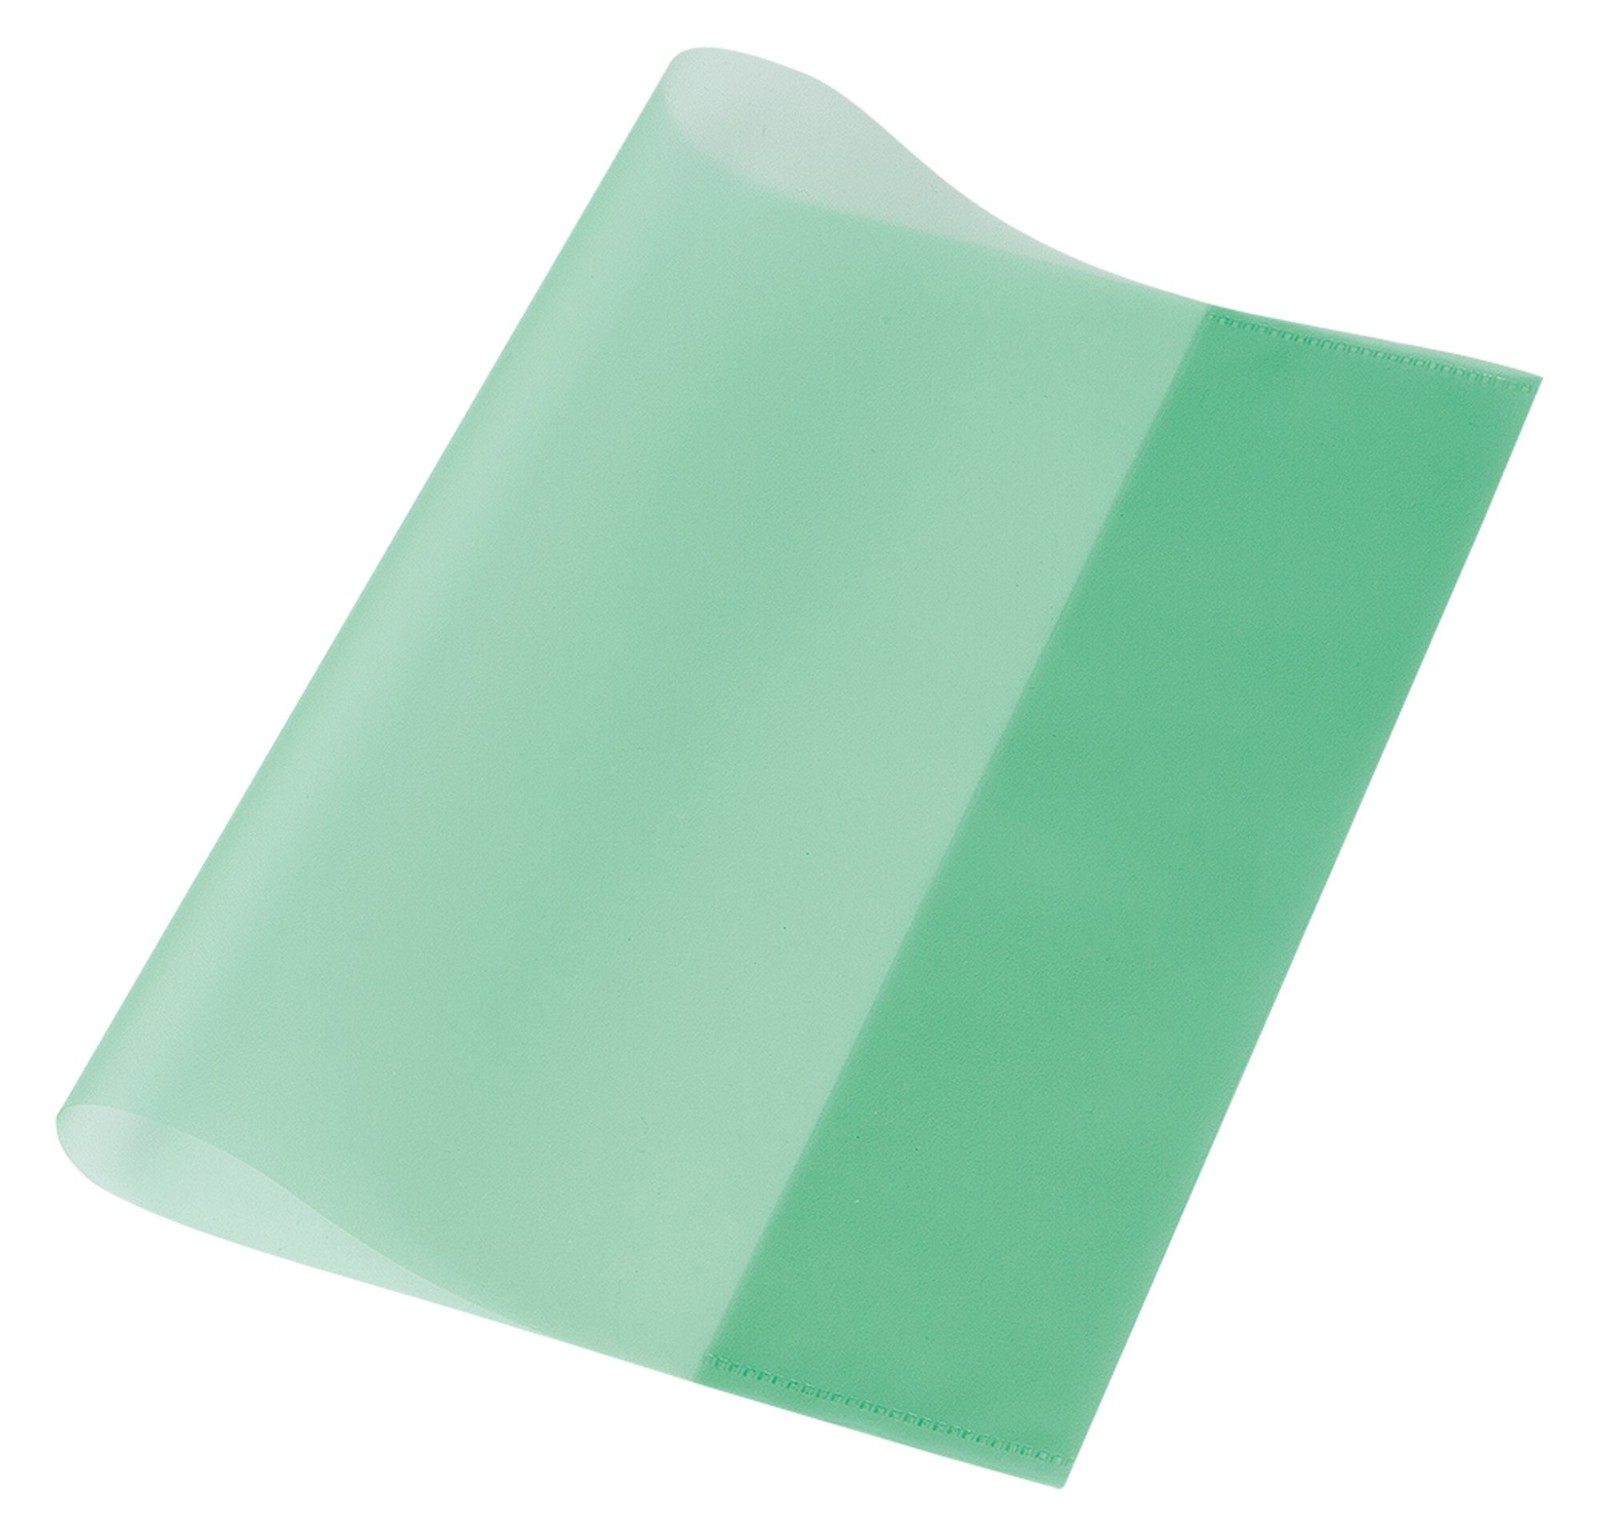 Panta plast Obaly na sešity A5 PP 0,8 OE x 10 ks zelené